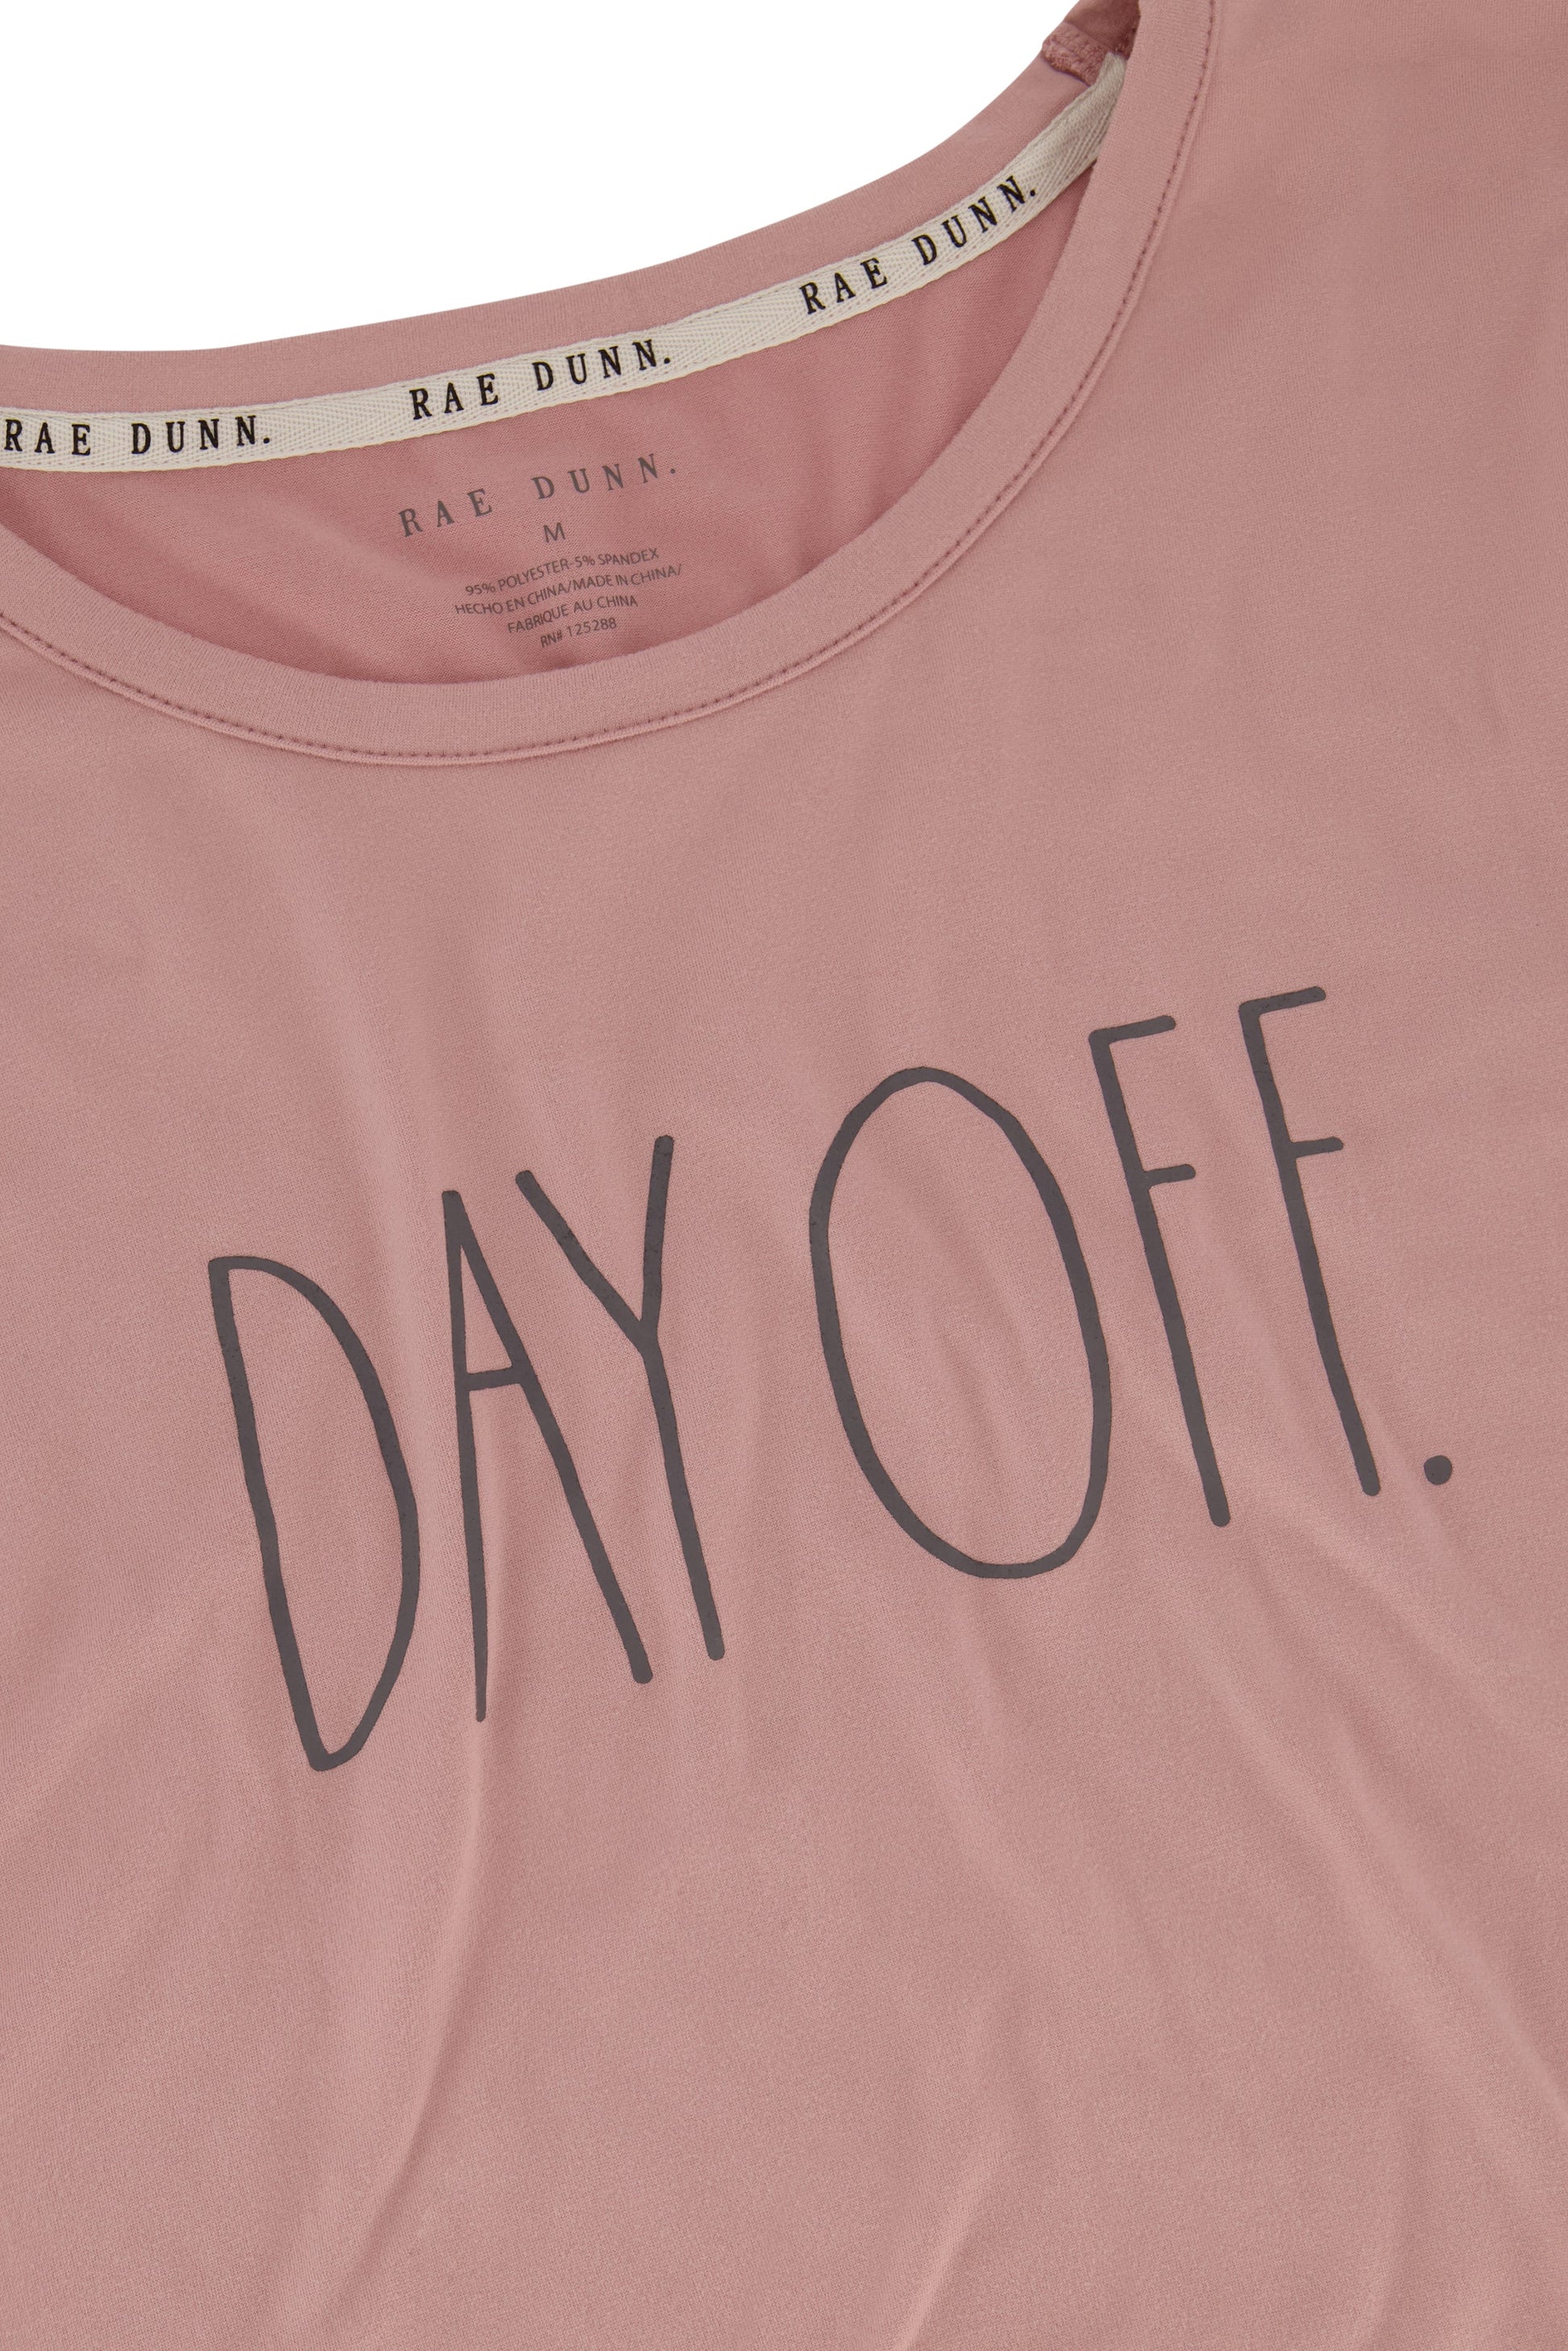 Women's "DAY OFF" Short Sleeve Top and Drawstring Stripe Print Joggers Pajama Set - Rae Dunn Wear